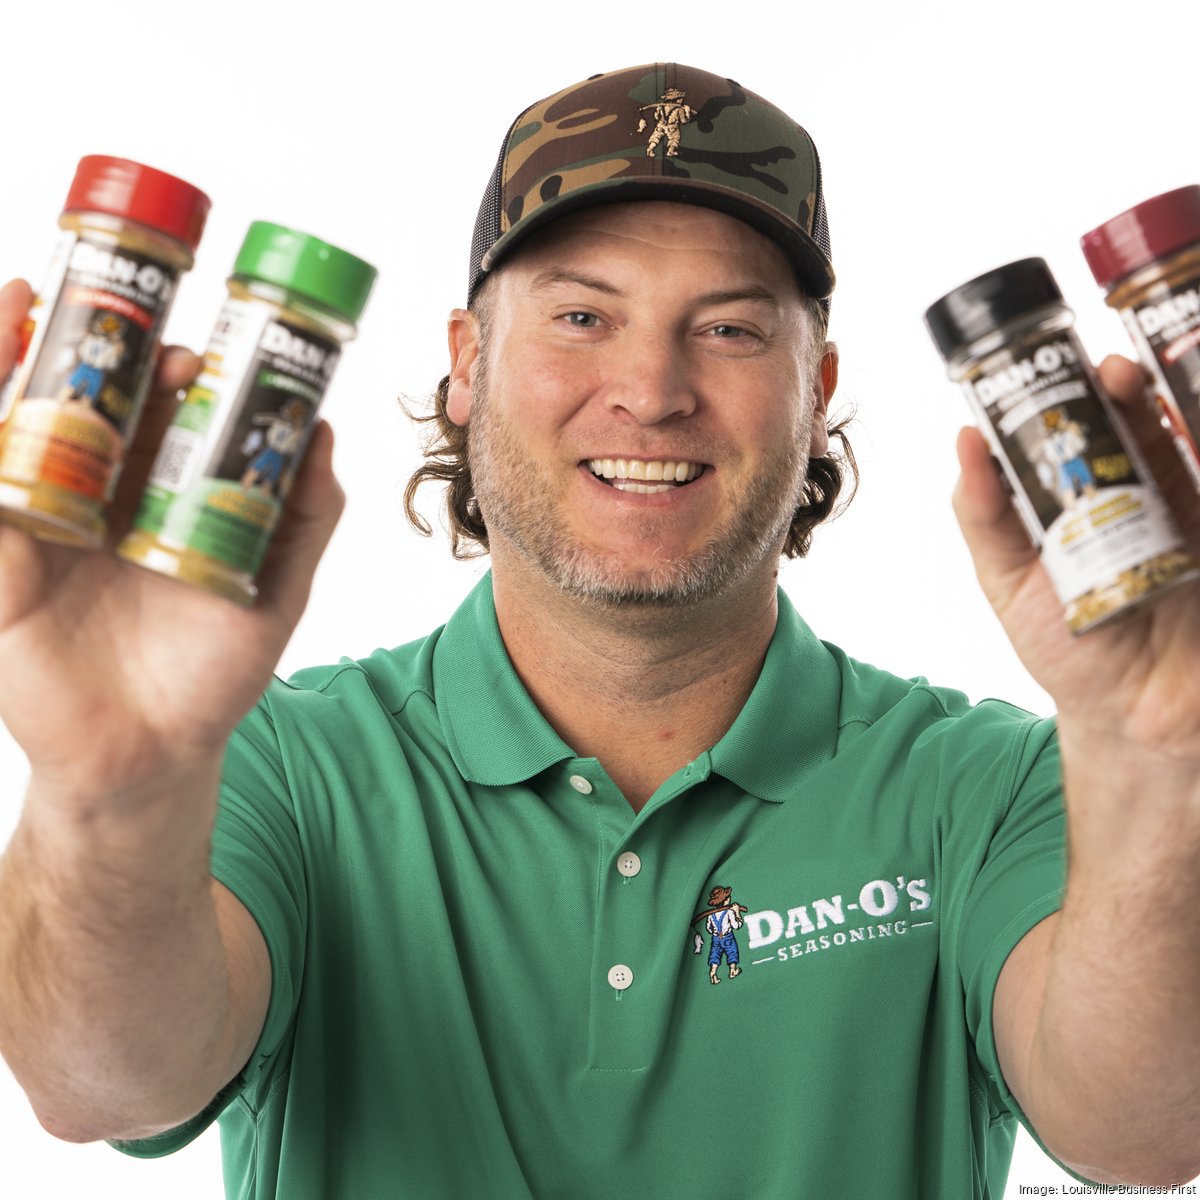 Dan-O's Finds Success at BJ's Wholesale Club